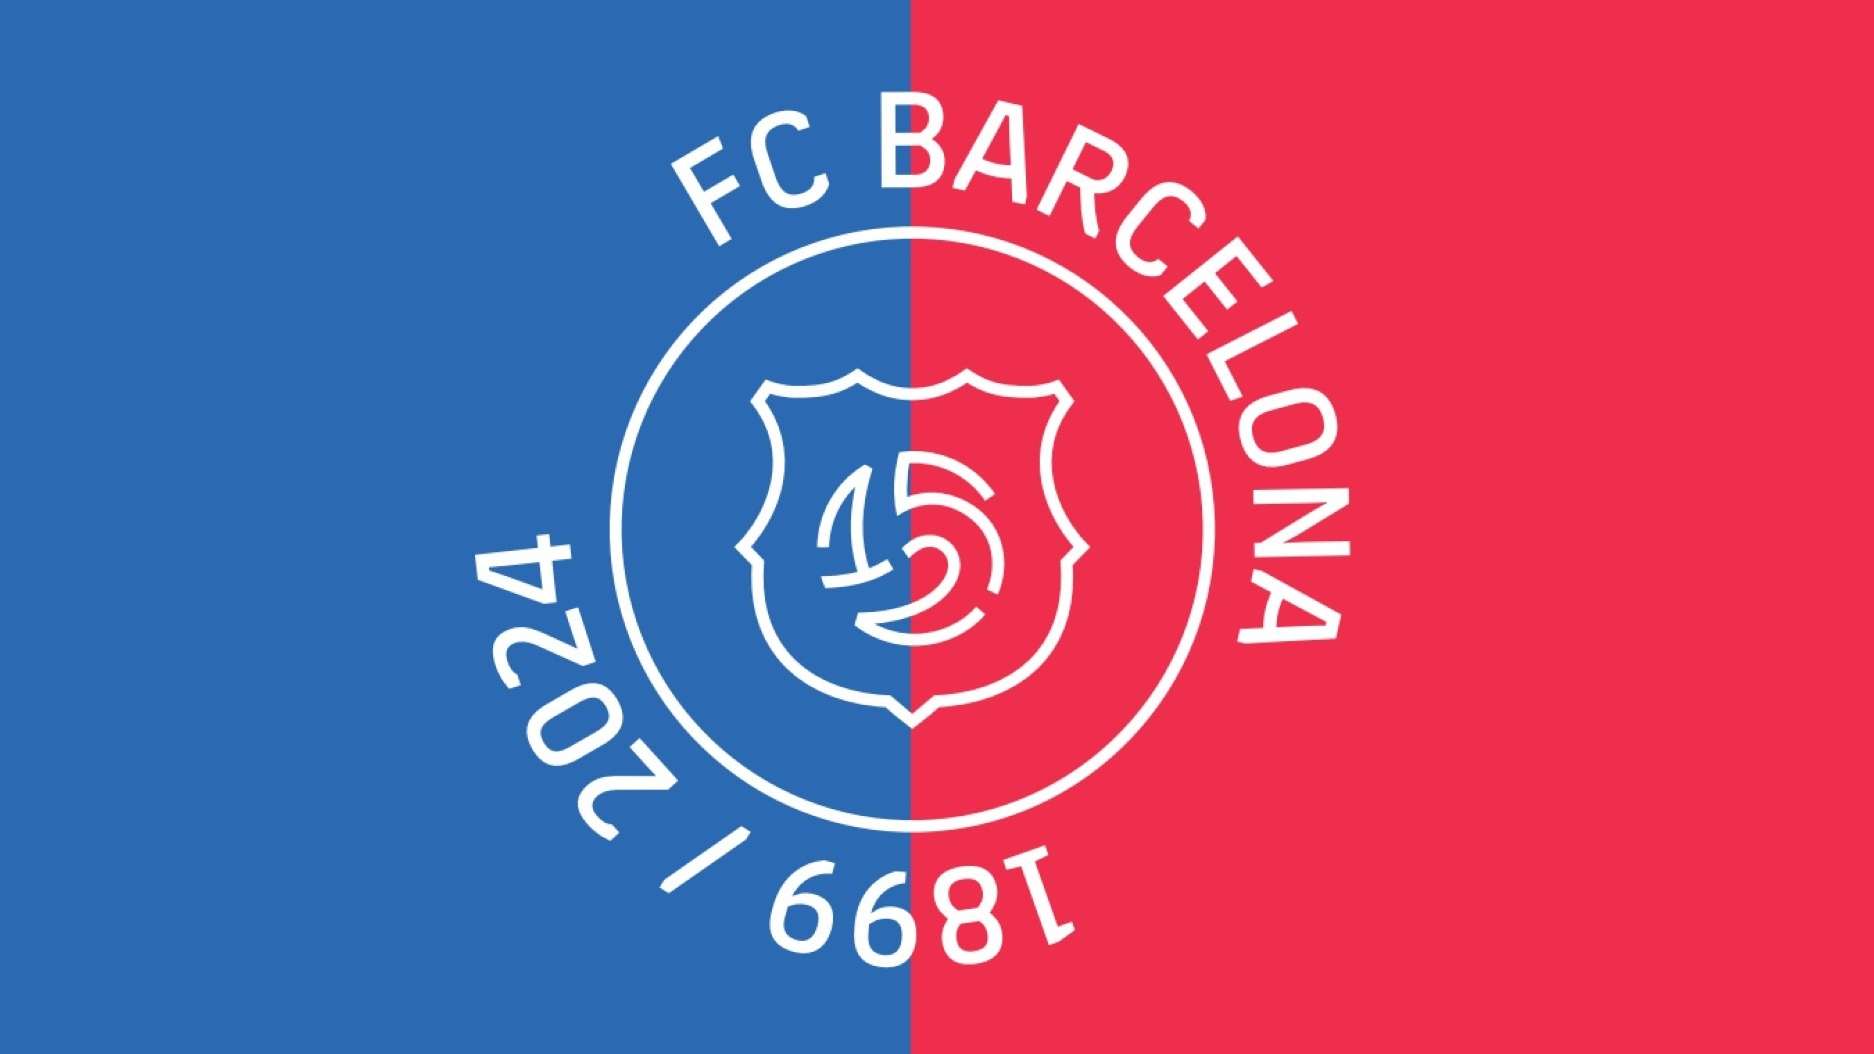 FC Barcelona 125